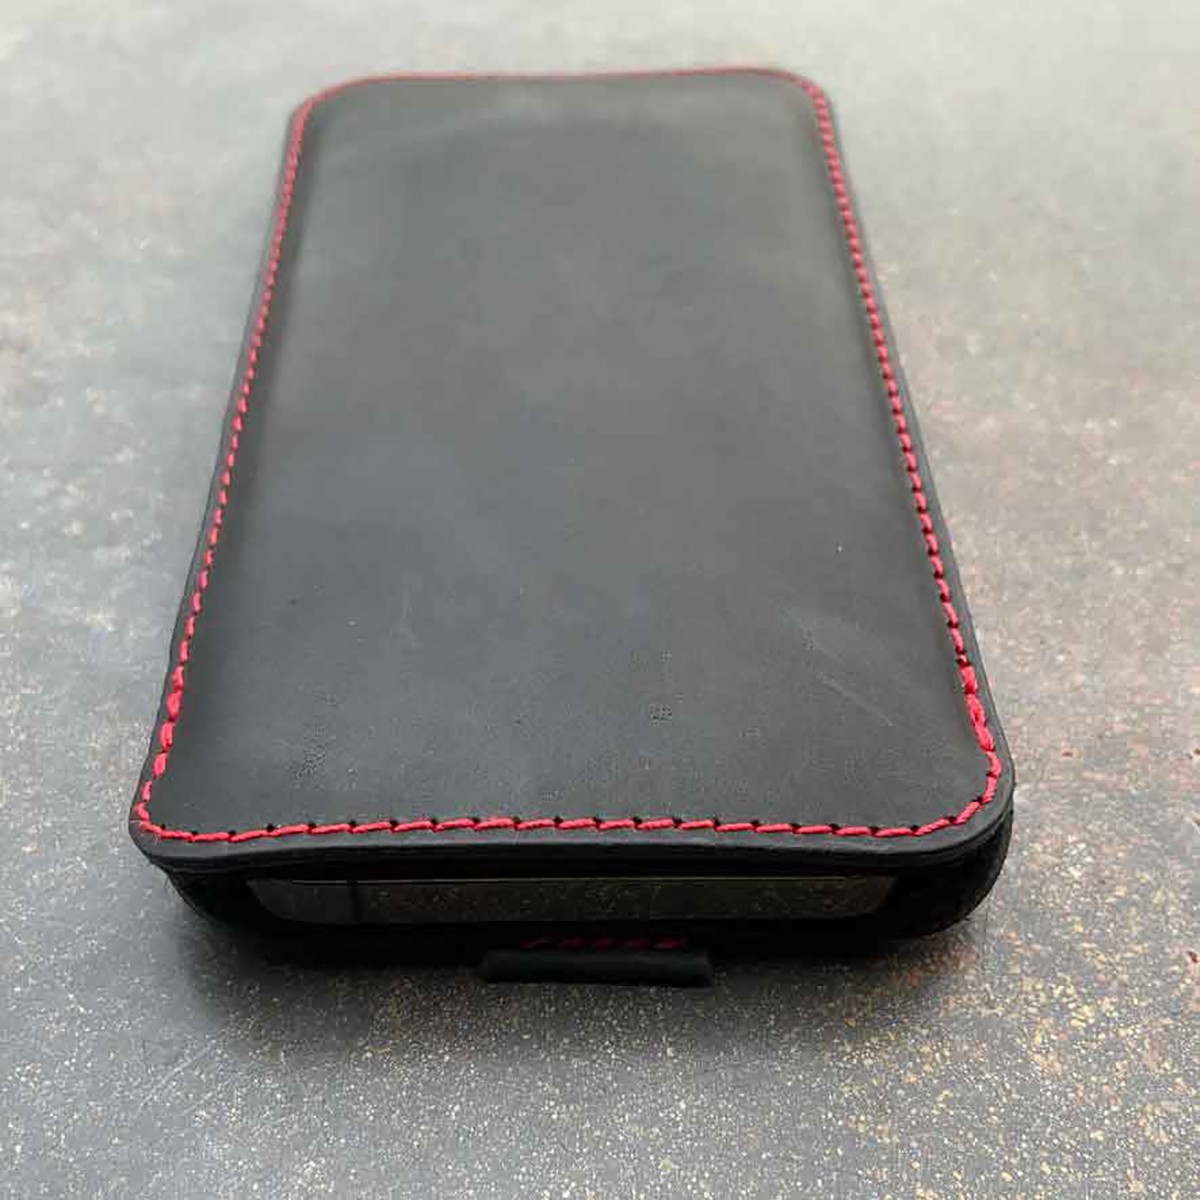 iPhone 14 Pro Max Lederhülle - Pasgenauer Schutz aus vegetabil gegerbtem Leder & mulesing-freiem Wollfilz